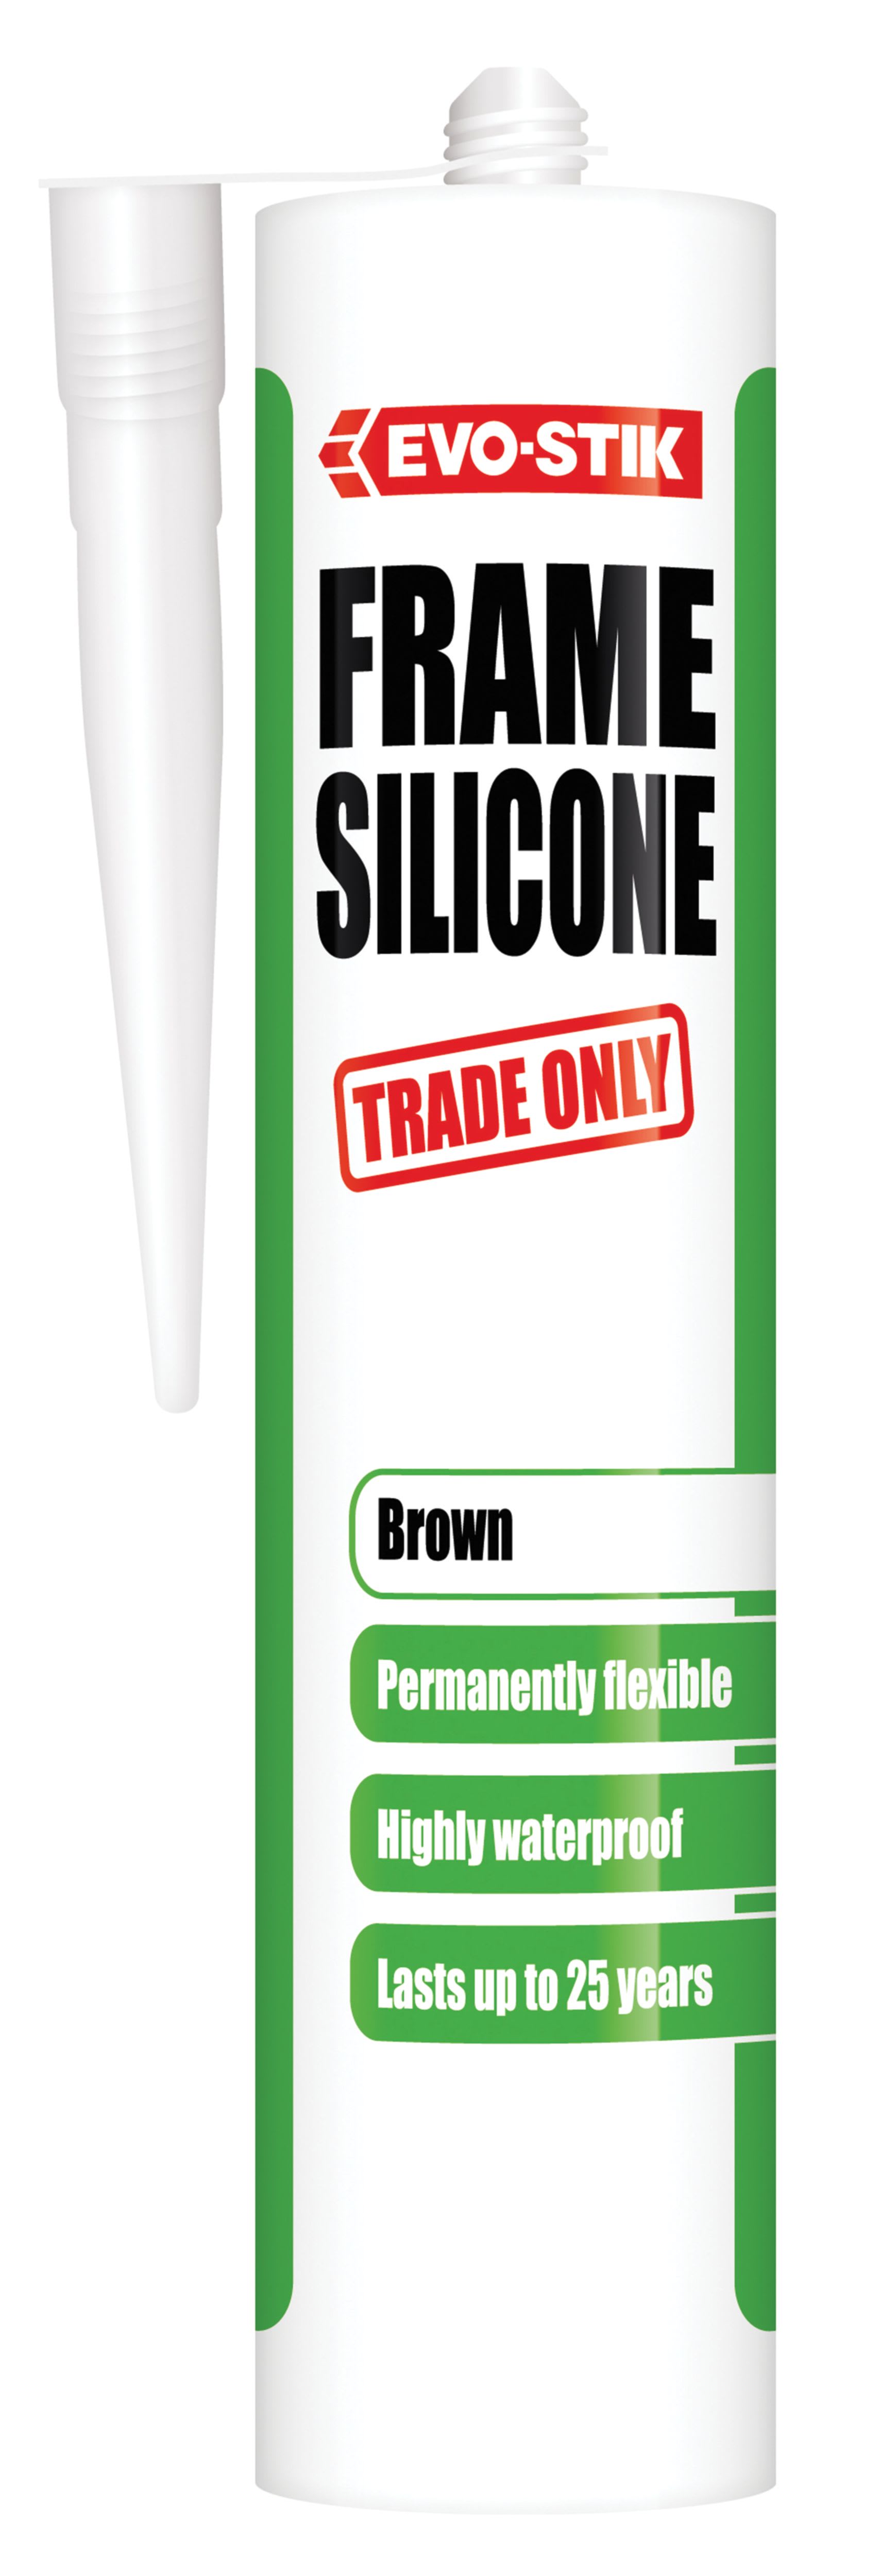 Evo-Stik Trade Only Frame Brown Silicone - 280ml